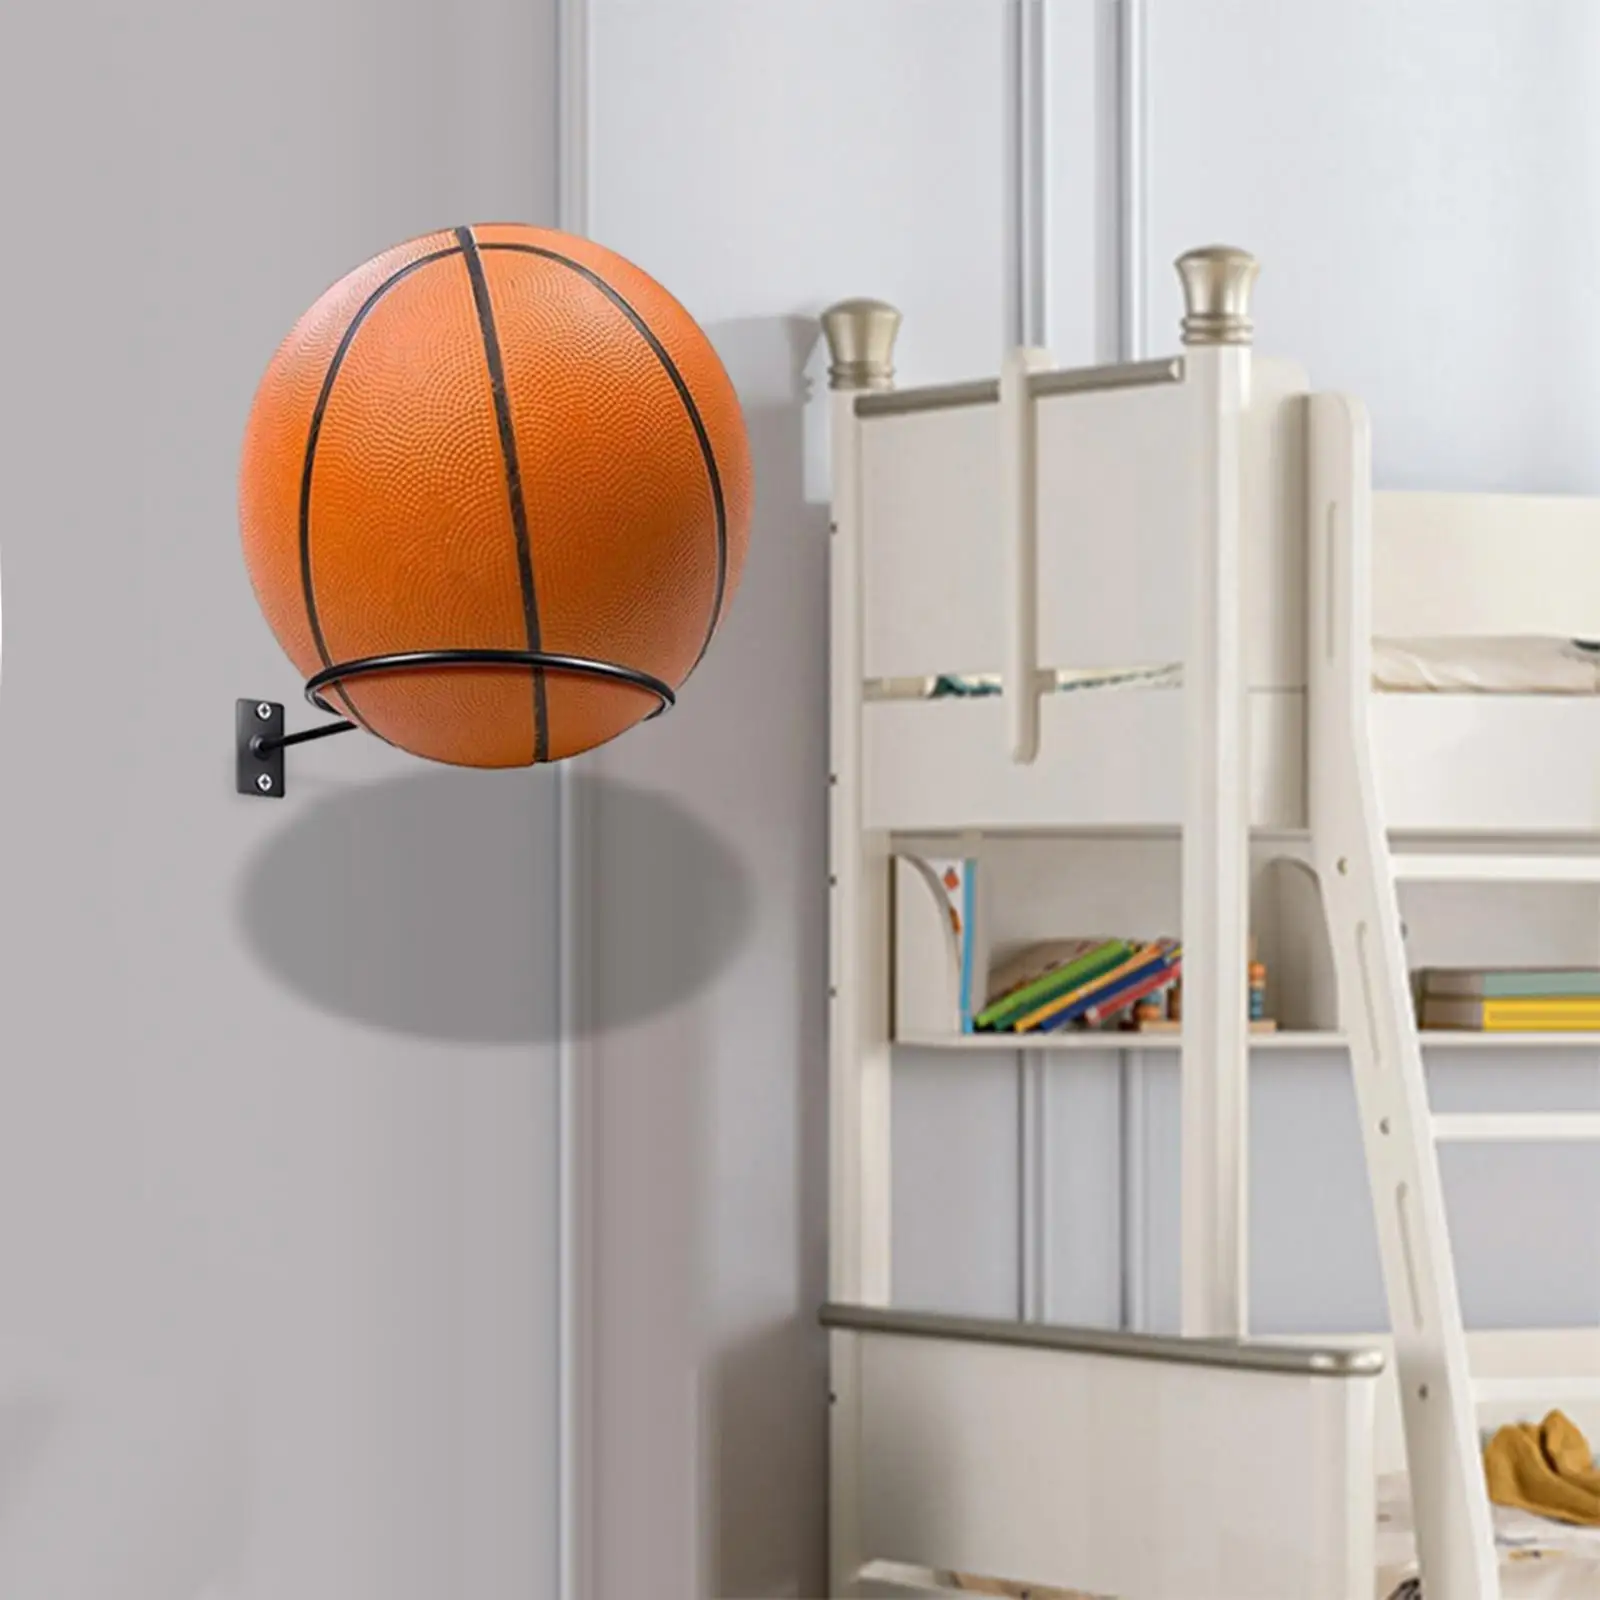 Sports Ball Holder Garage Organizer Basketball Wall Display Shelf Ball Rack Holder for Football Basketball Spheres Volleyball